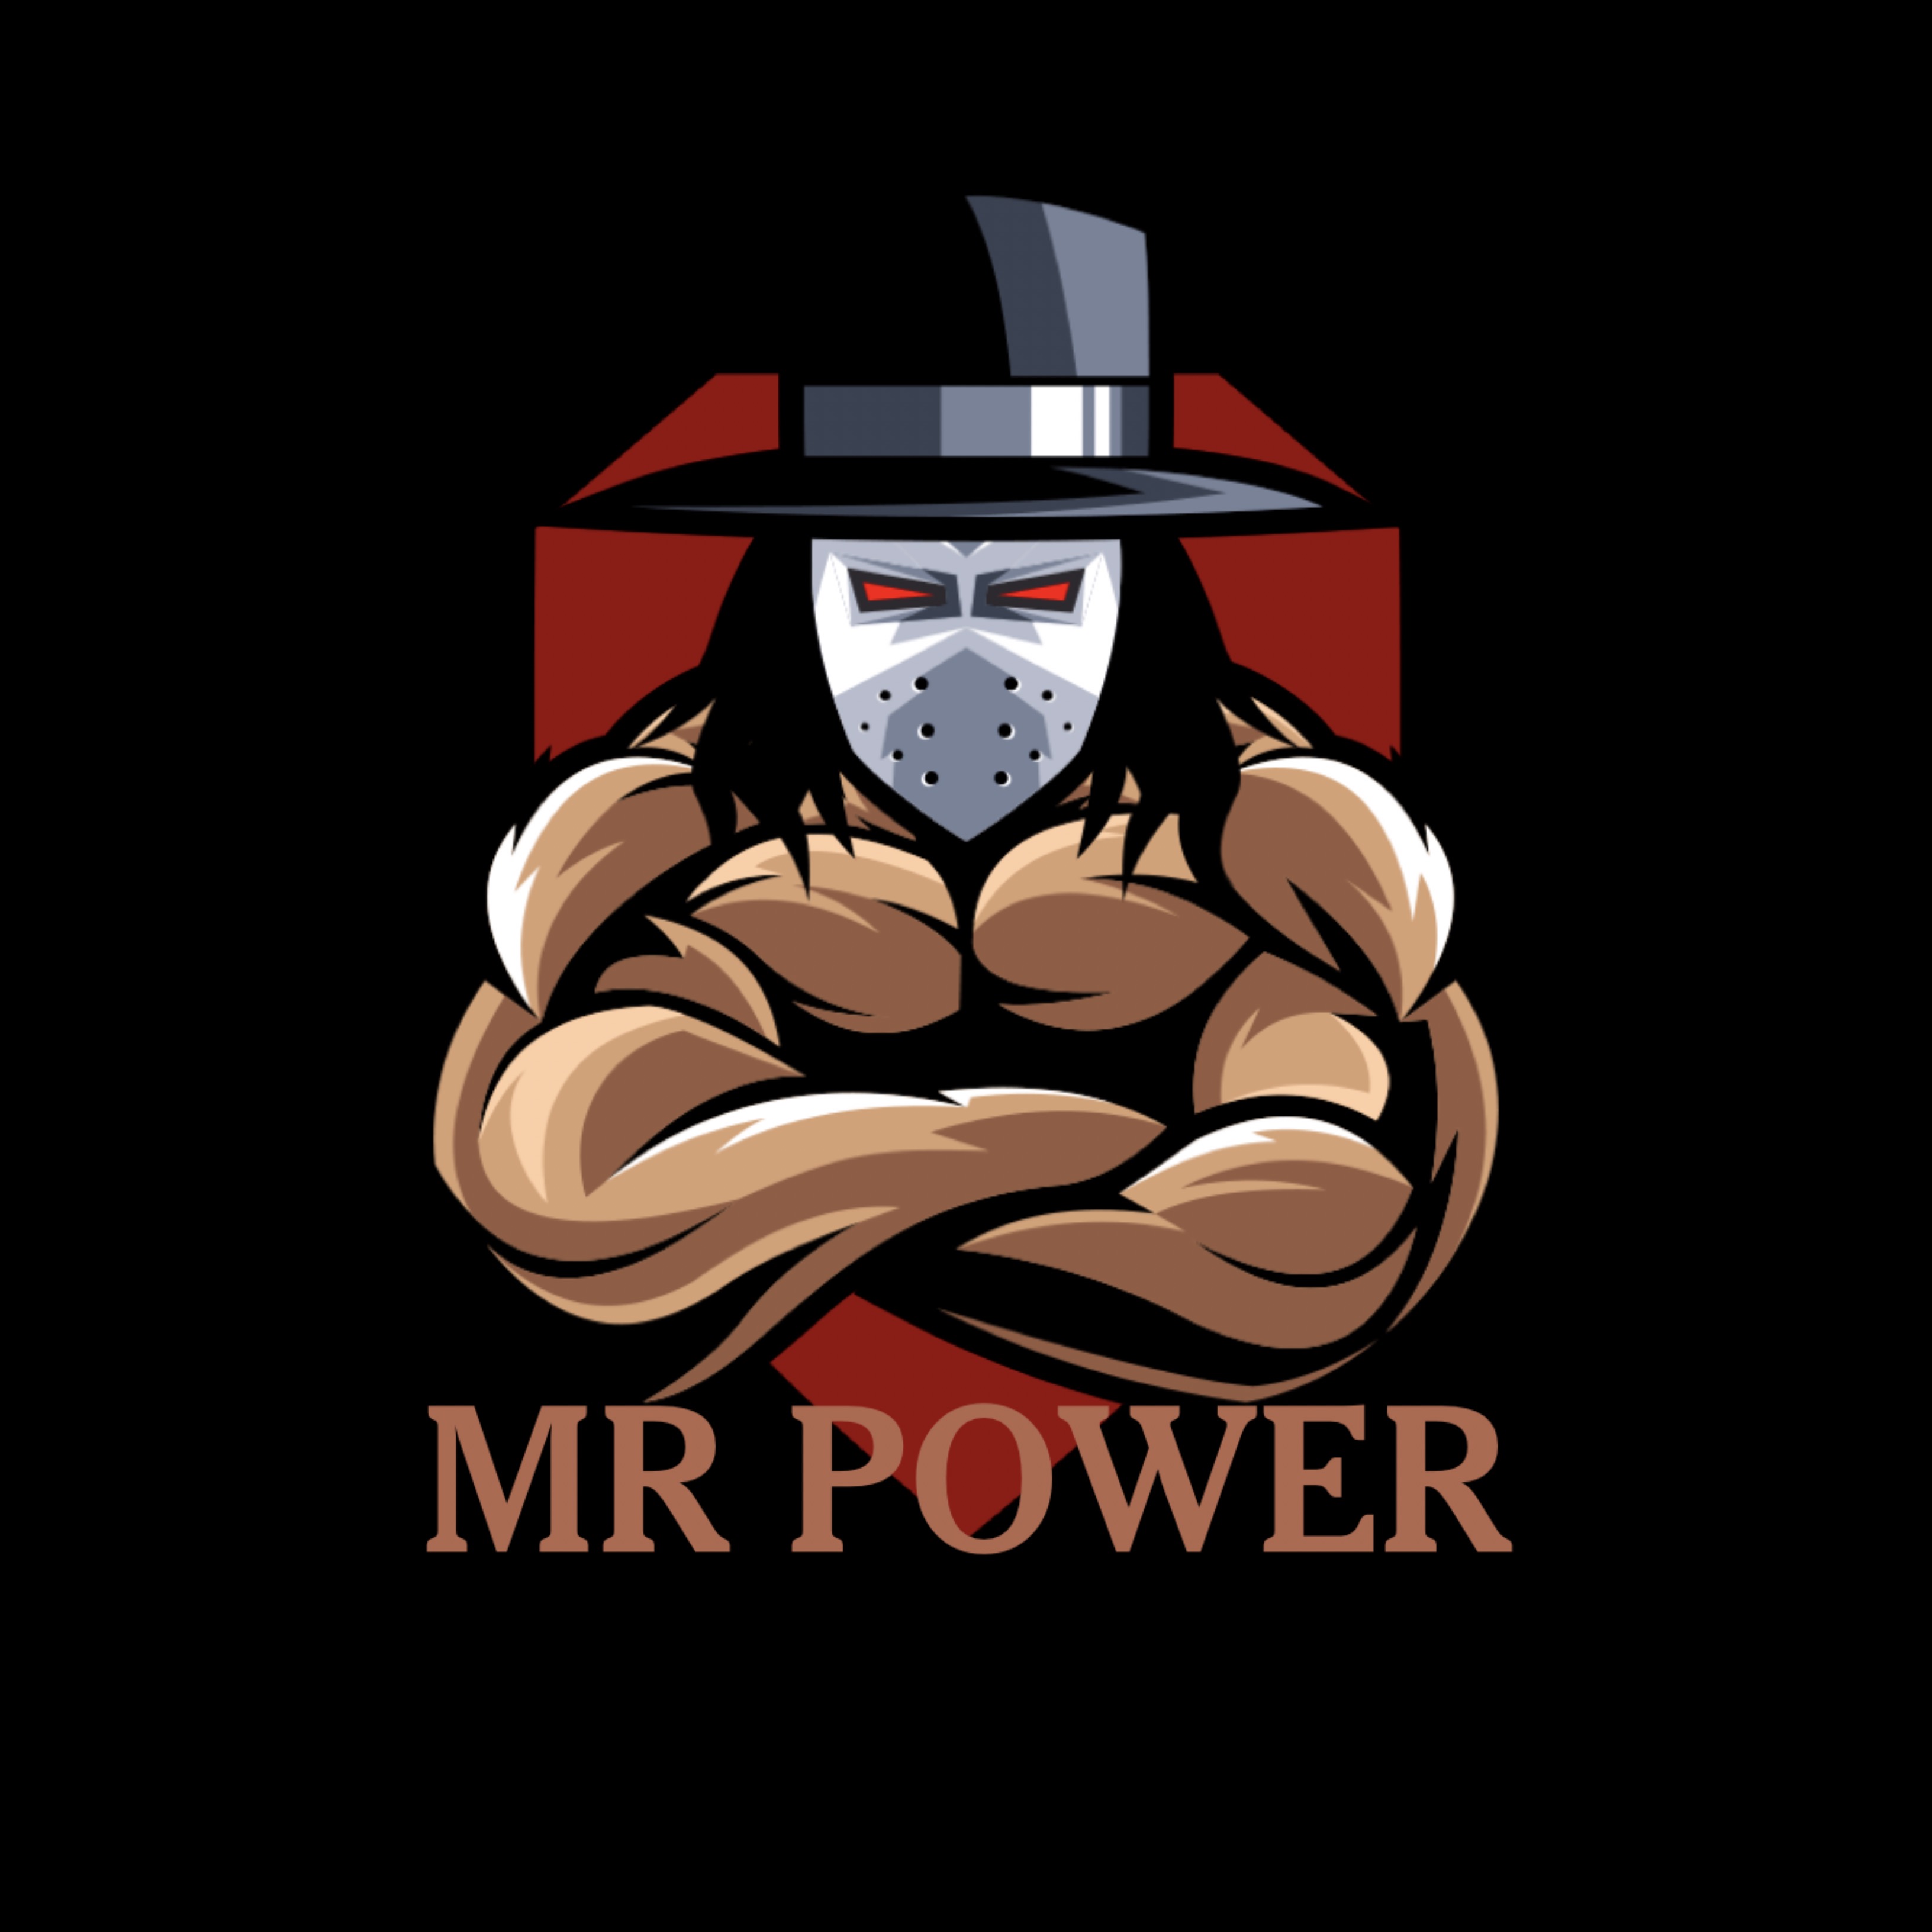 Mr Power's avatar.